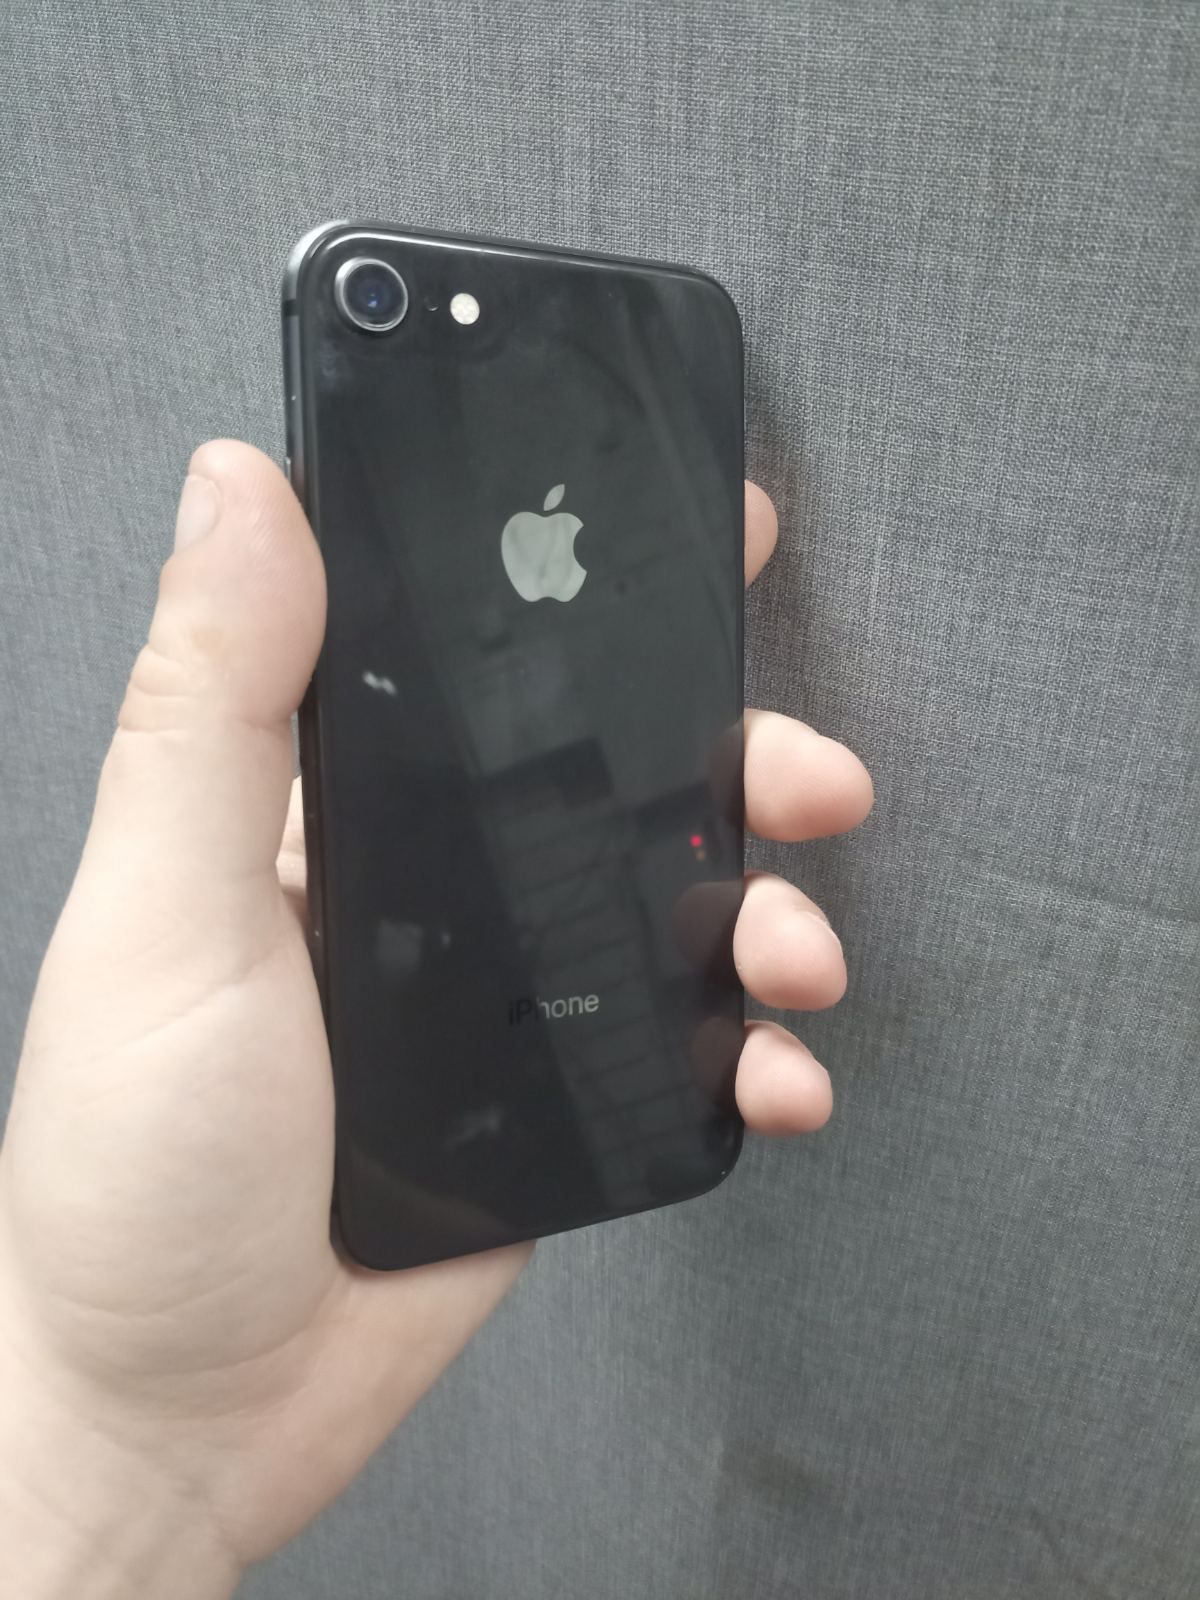 Apple Iphone 8 64gb